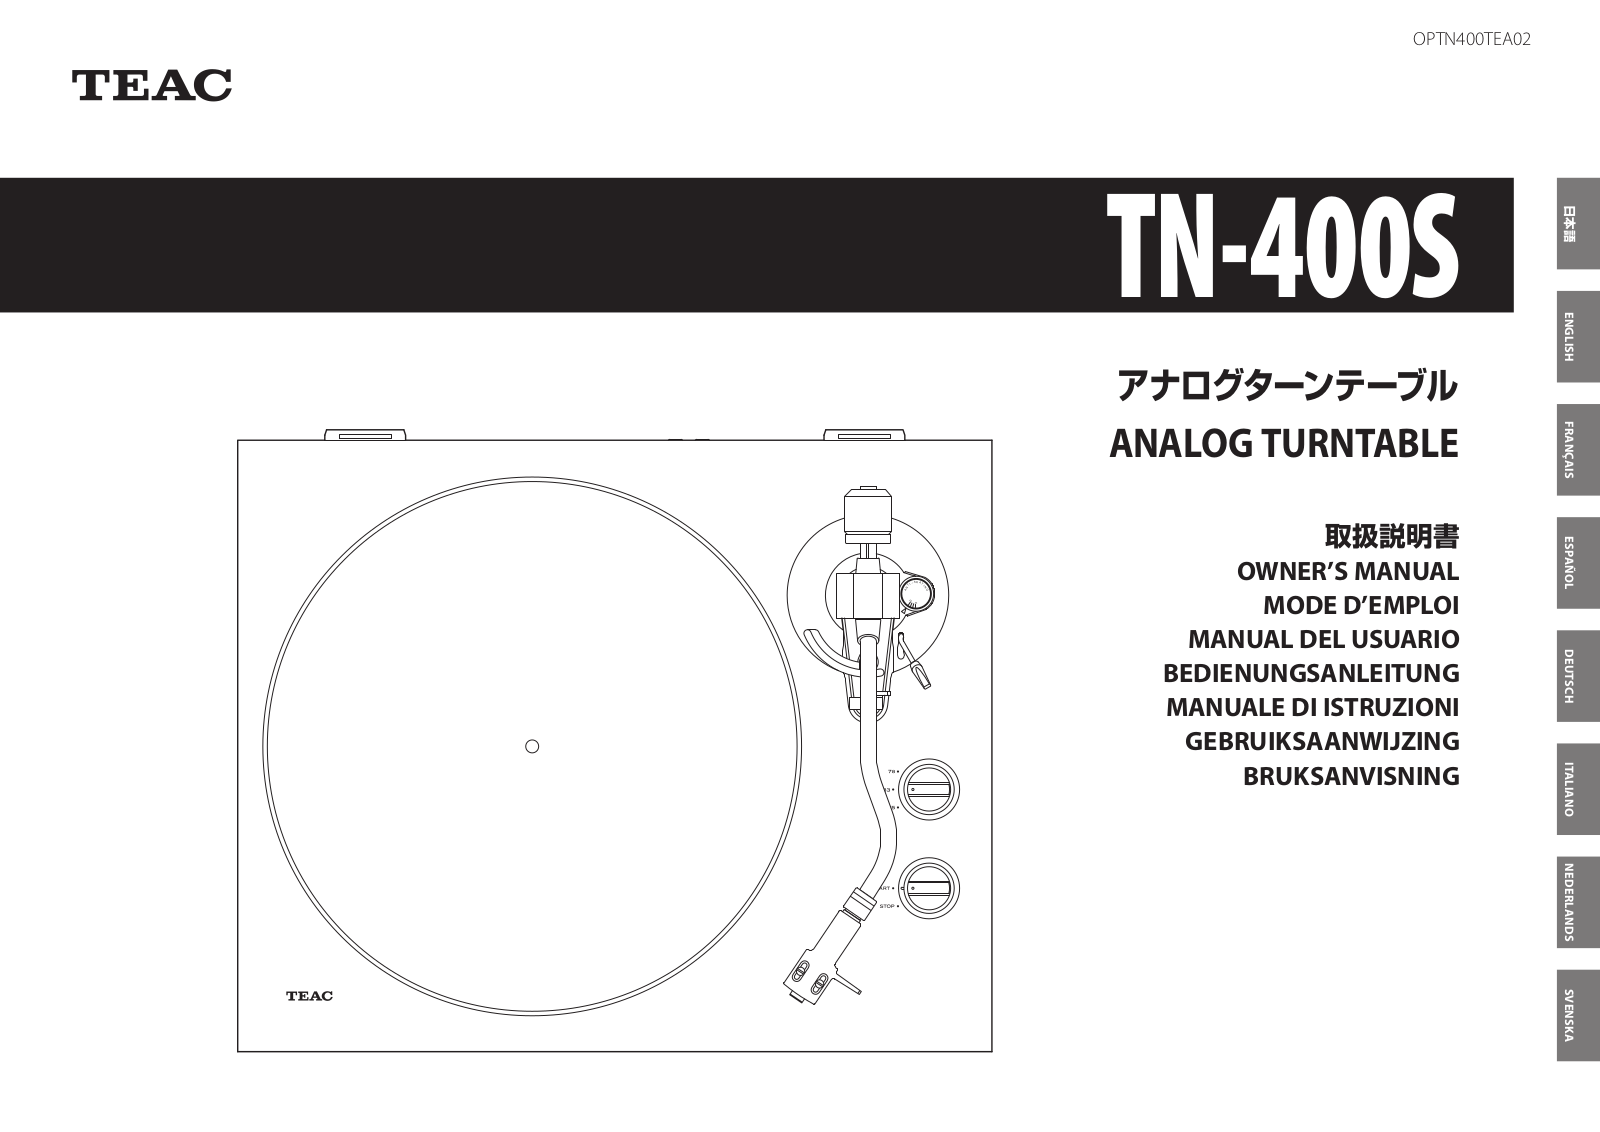 TEAC TN-400S Owner's Manual